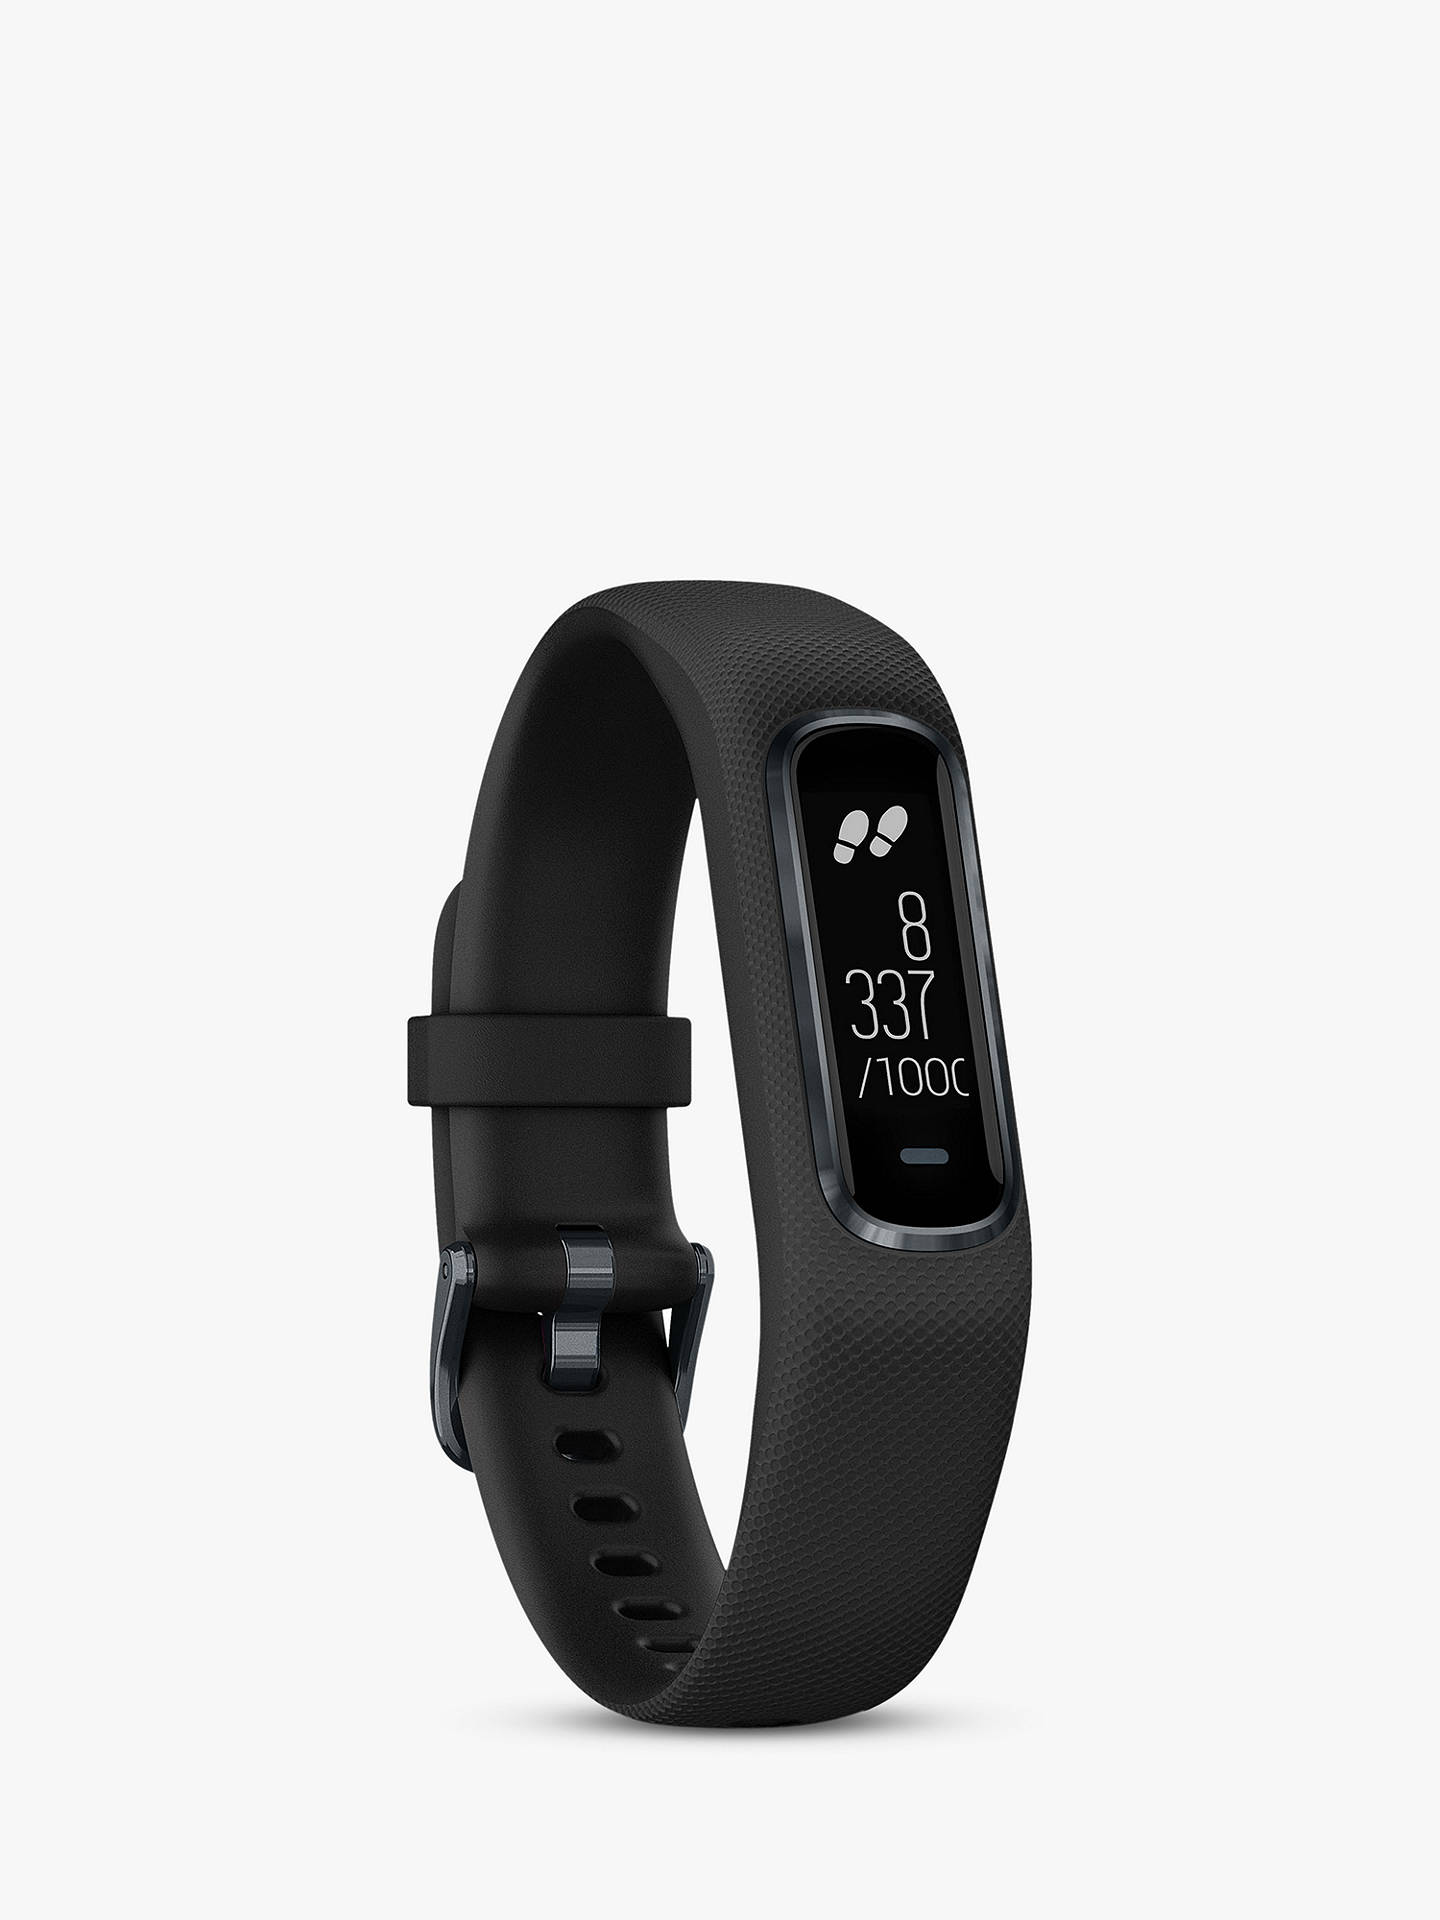 Garmin vivosmart 4 Fitness Activity Tracker with Wrist Based Heart Rate ...